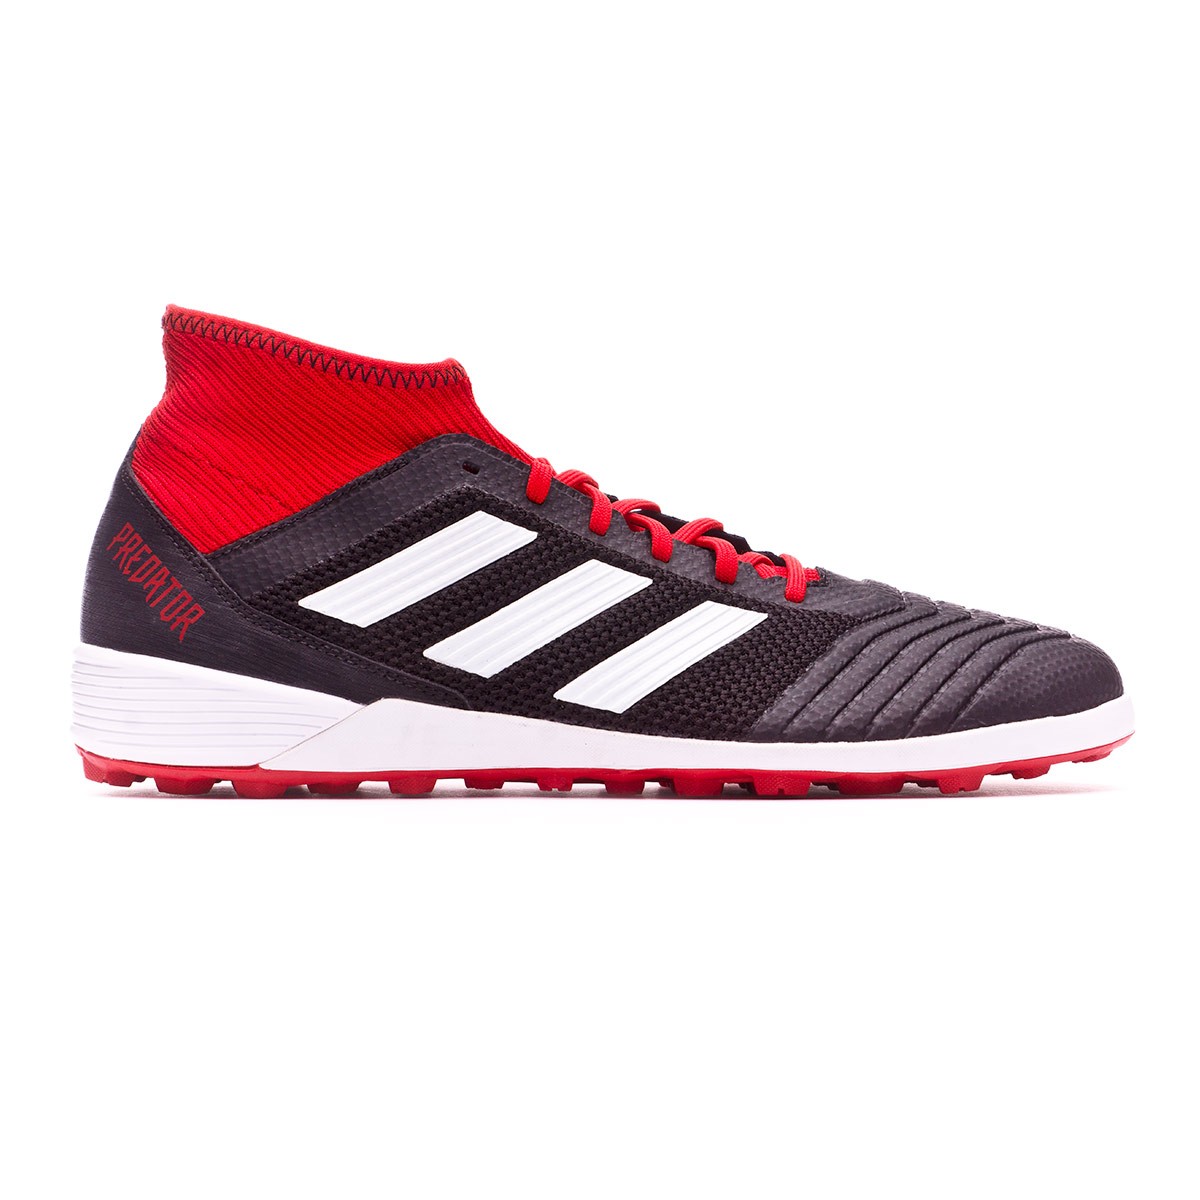 Zapatilla adidas Predator Tango 18.3 Turf Core black-White-Solar red -  Tienda de fútbol Fútbol Emotion